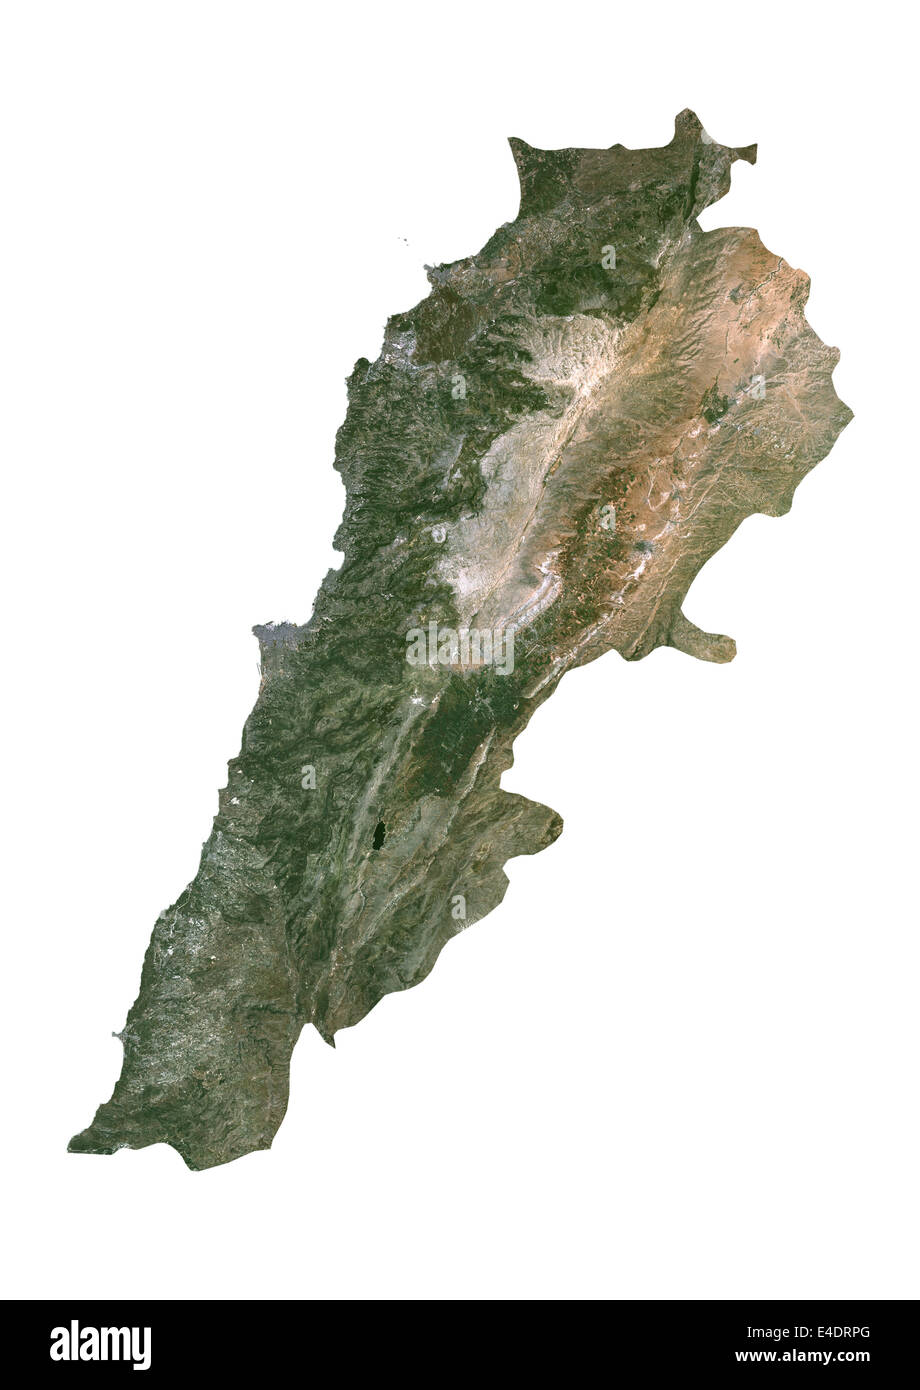 Lebanon Satellite Image E4DRPG 